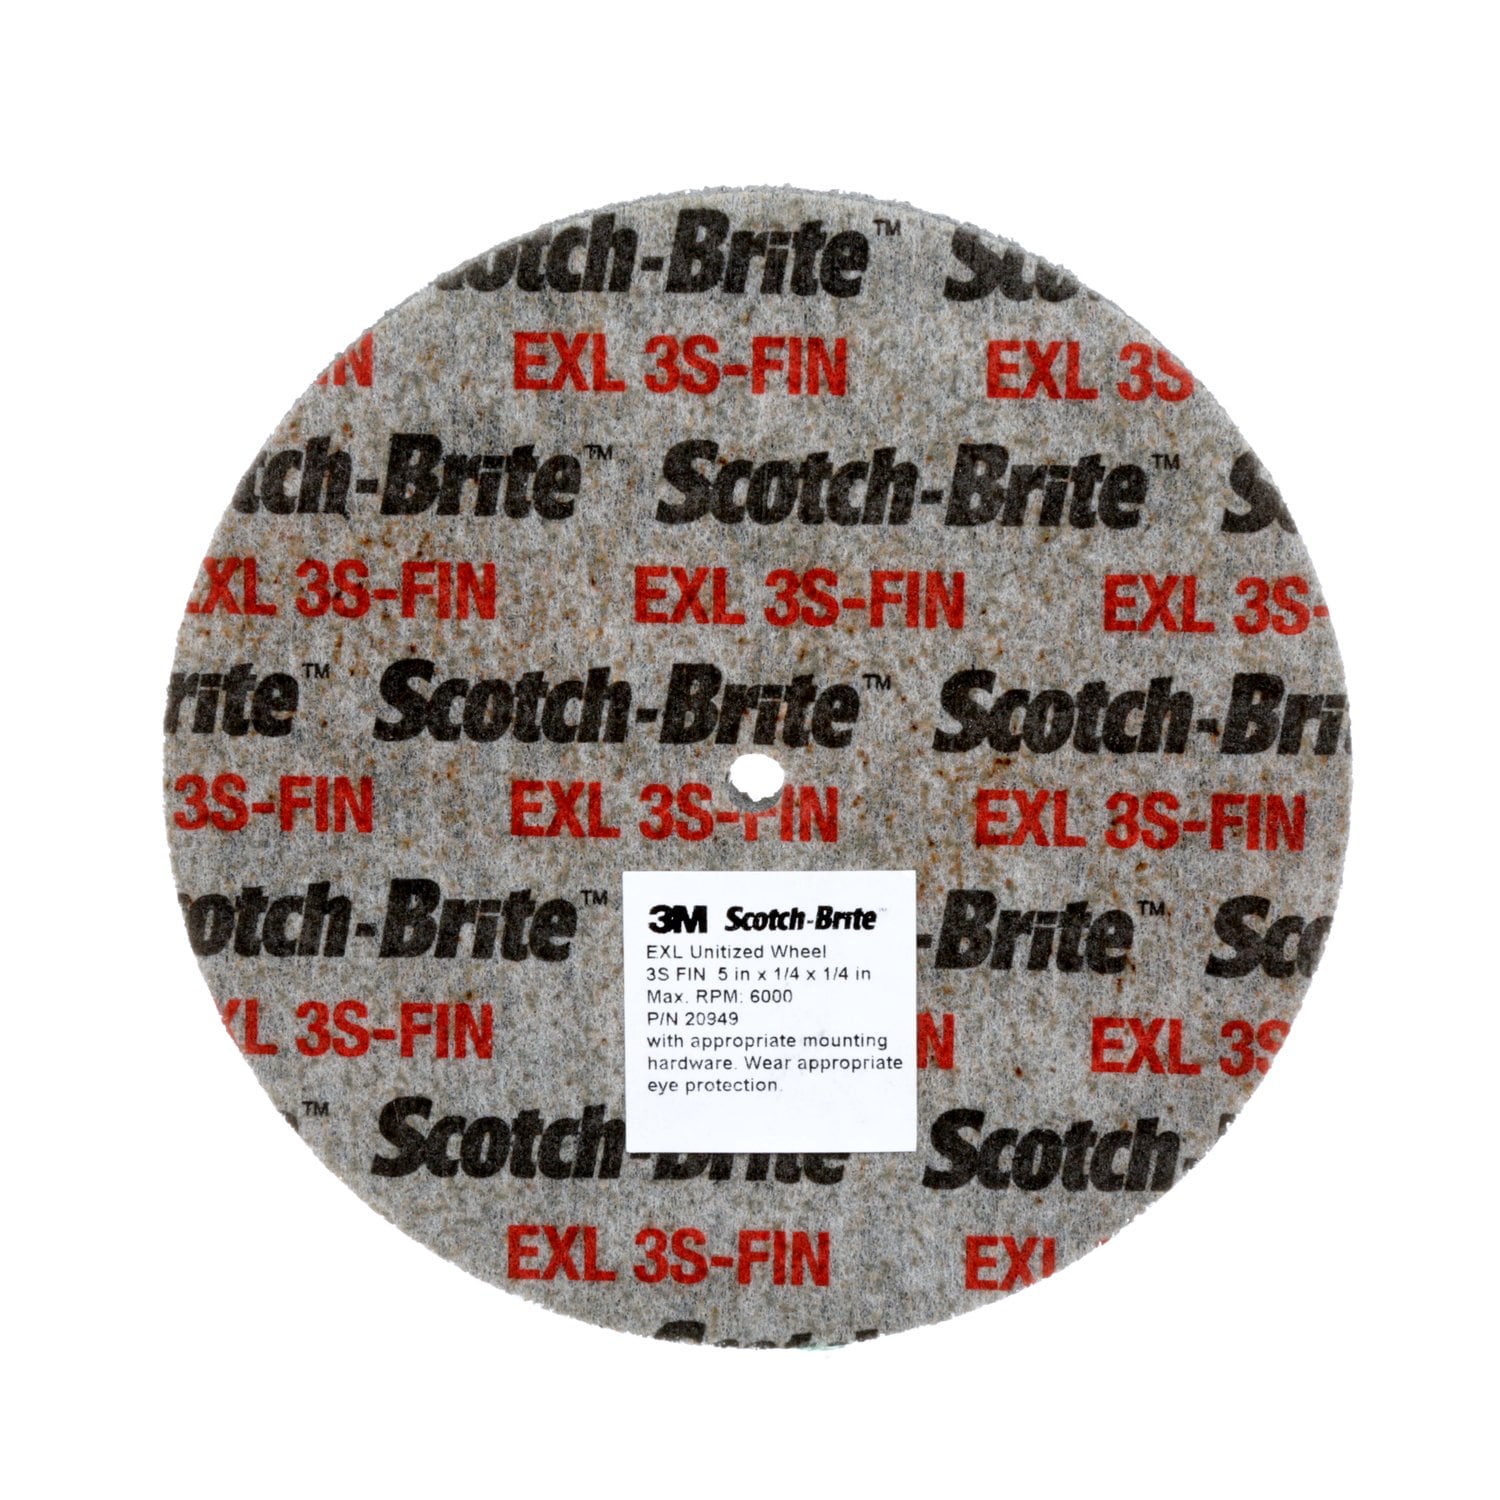 7010329400 - Scotch-Brite SST Unitized Wheel, 6 in x 1/2 in x 1/2 in 7S FIN, 4
ea/Case